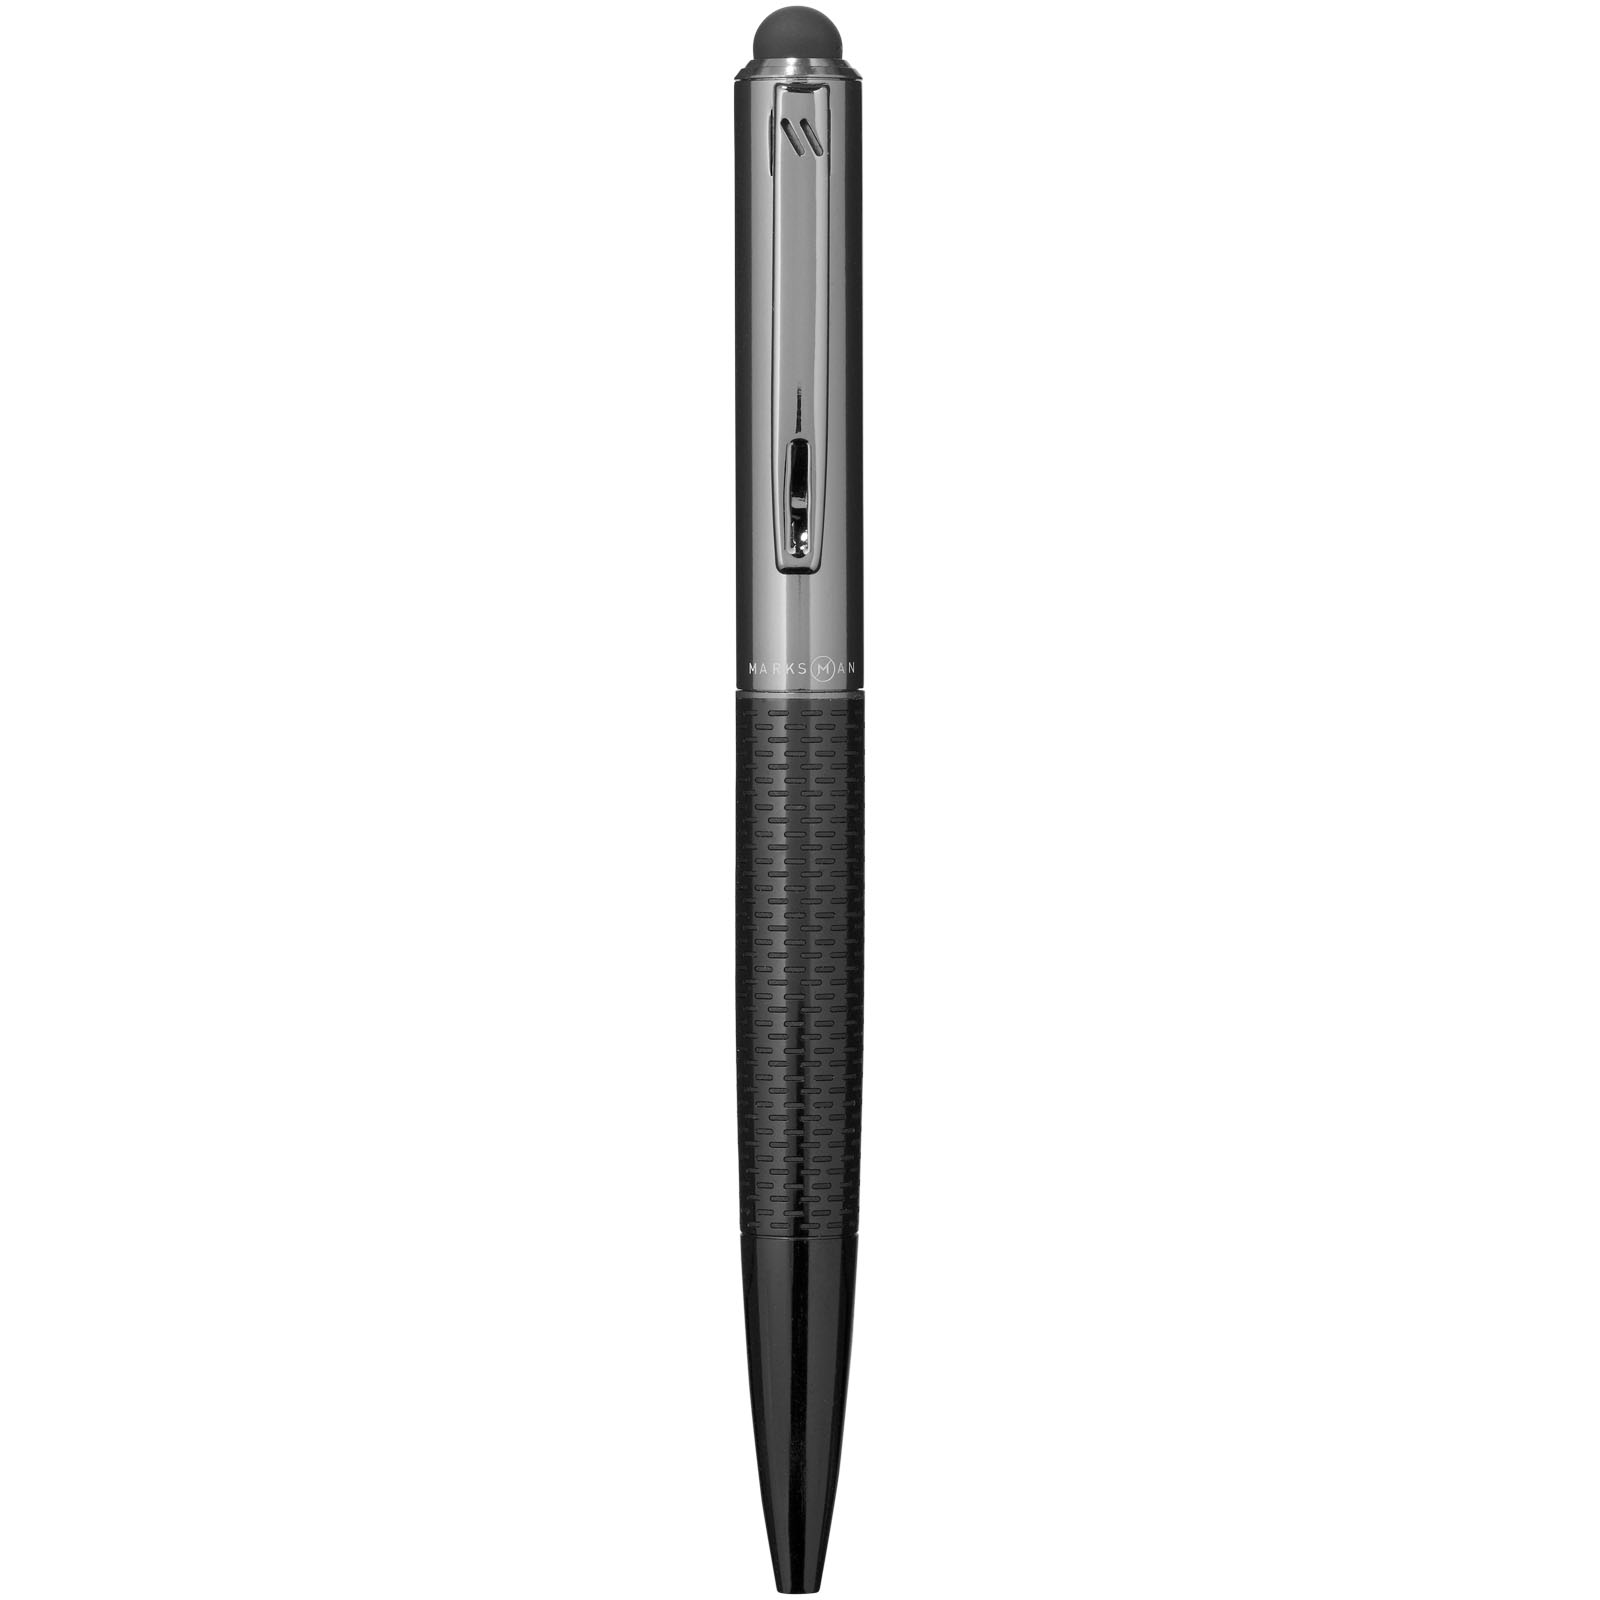 Advertising Ballpoint Pens - Dash stylus ballpoint pen - 2